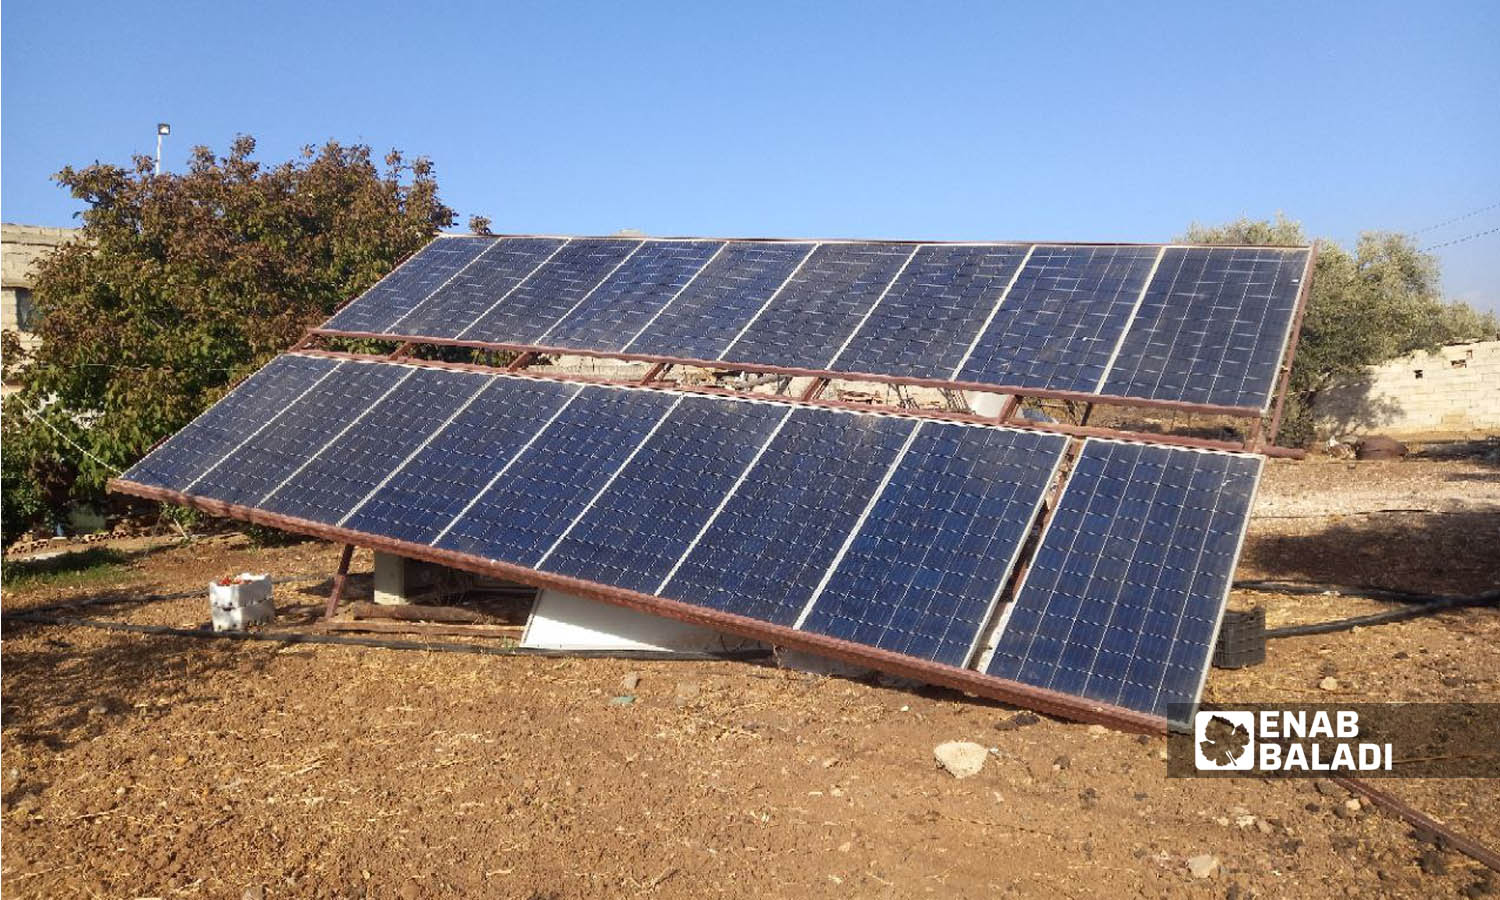 Solar panels inside a farm in Daraa governorate (Enab Baladi/Halim Muhammad)